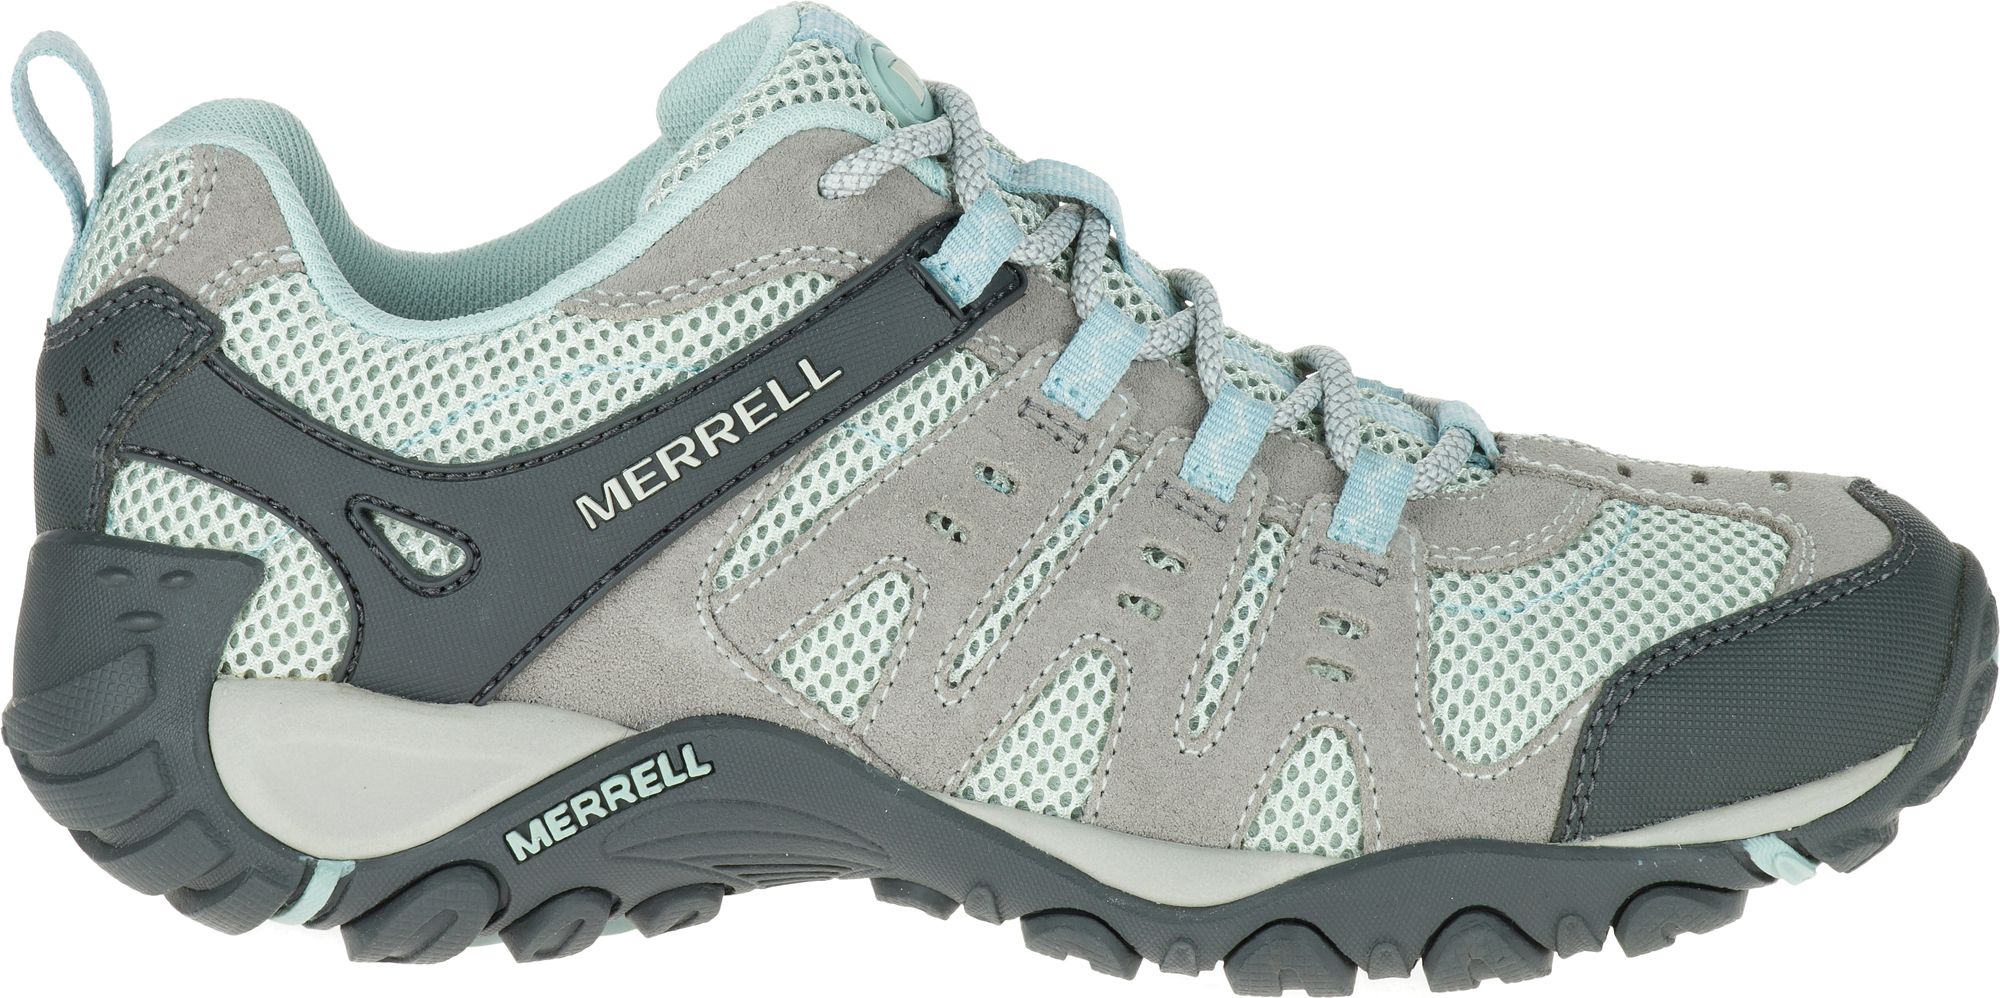 merrell women's hiking shoes reviews